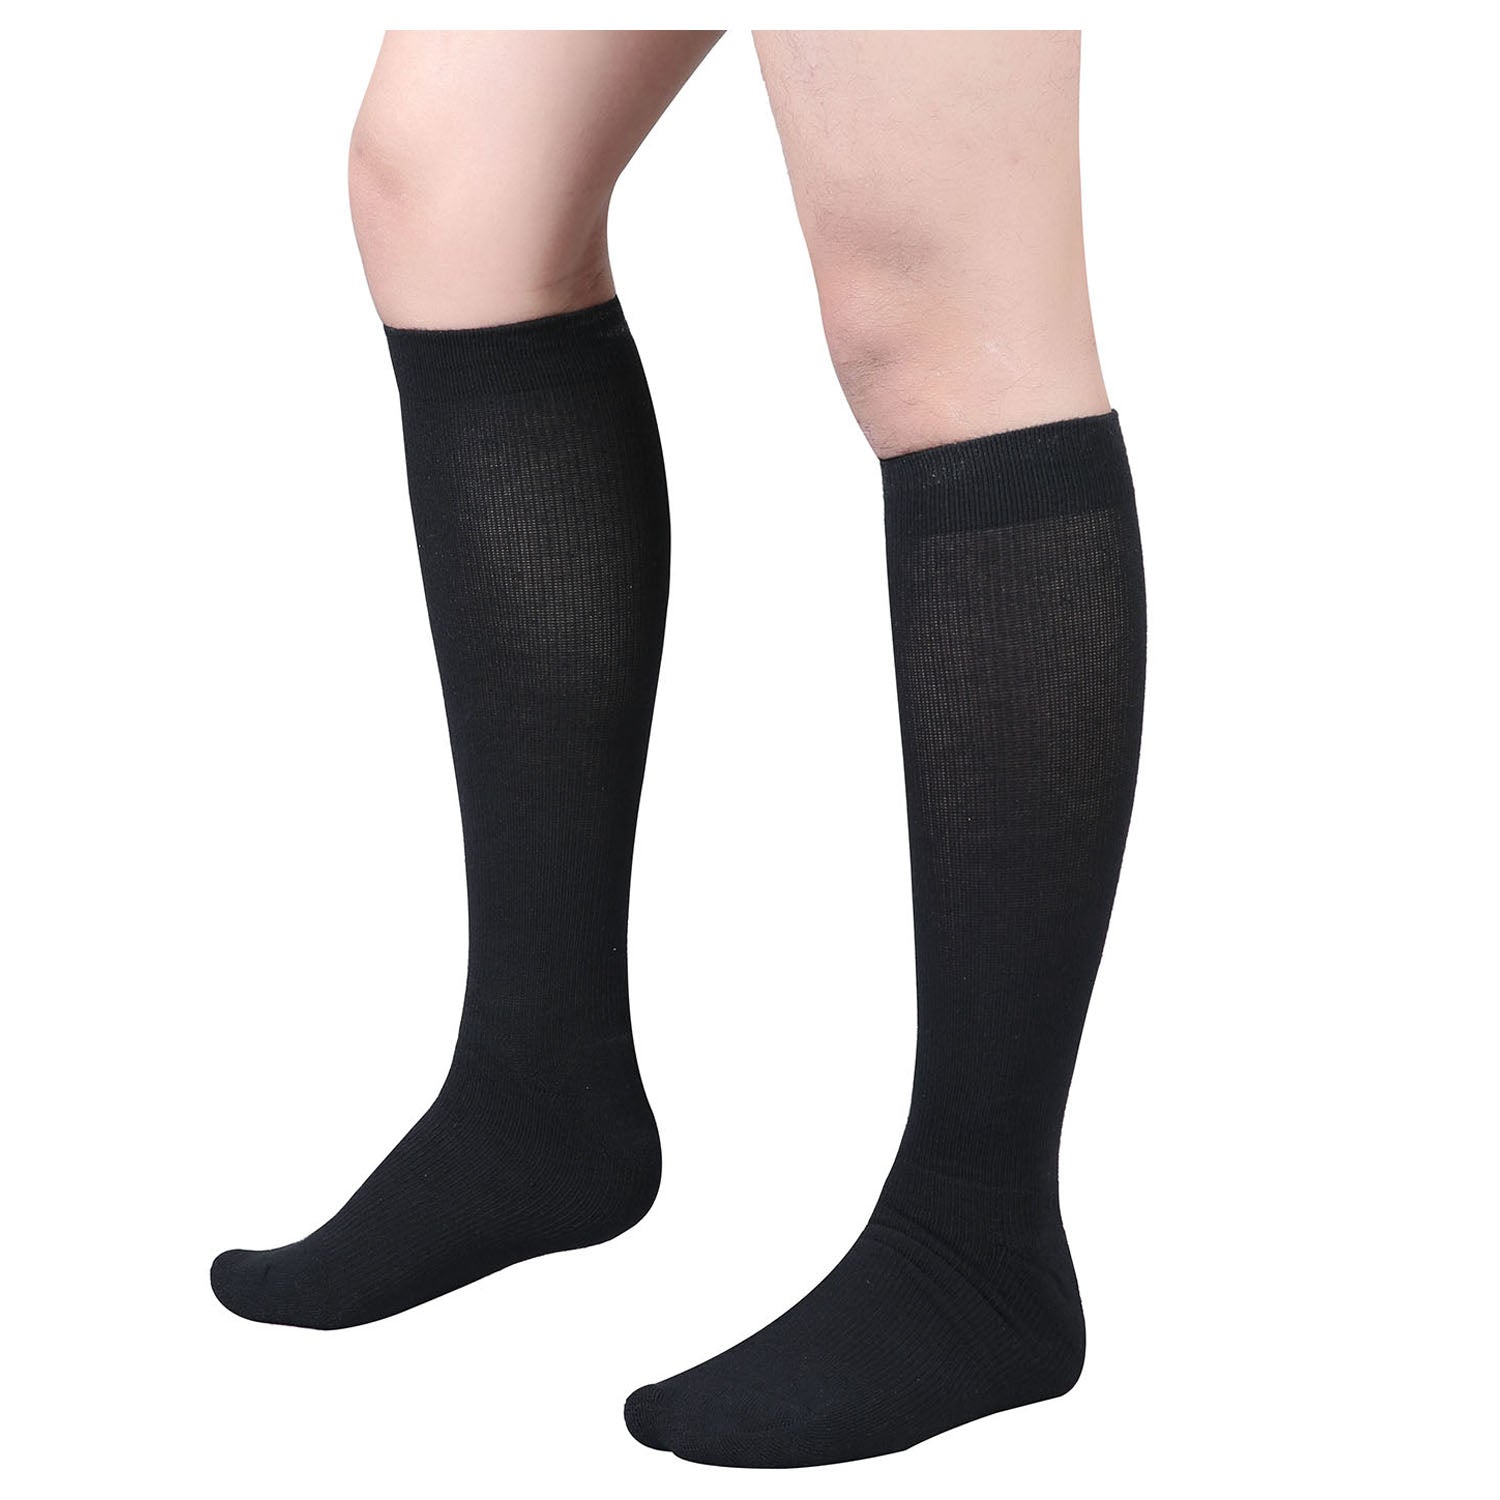 MD 15-20mmHg Coolmax Compression Knee High Socks– All About Socks